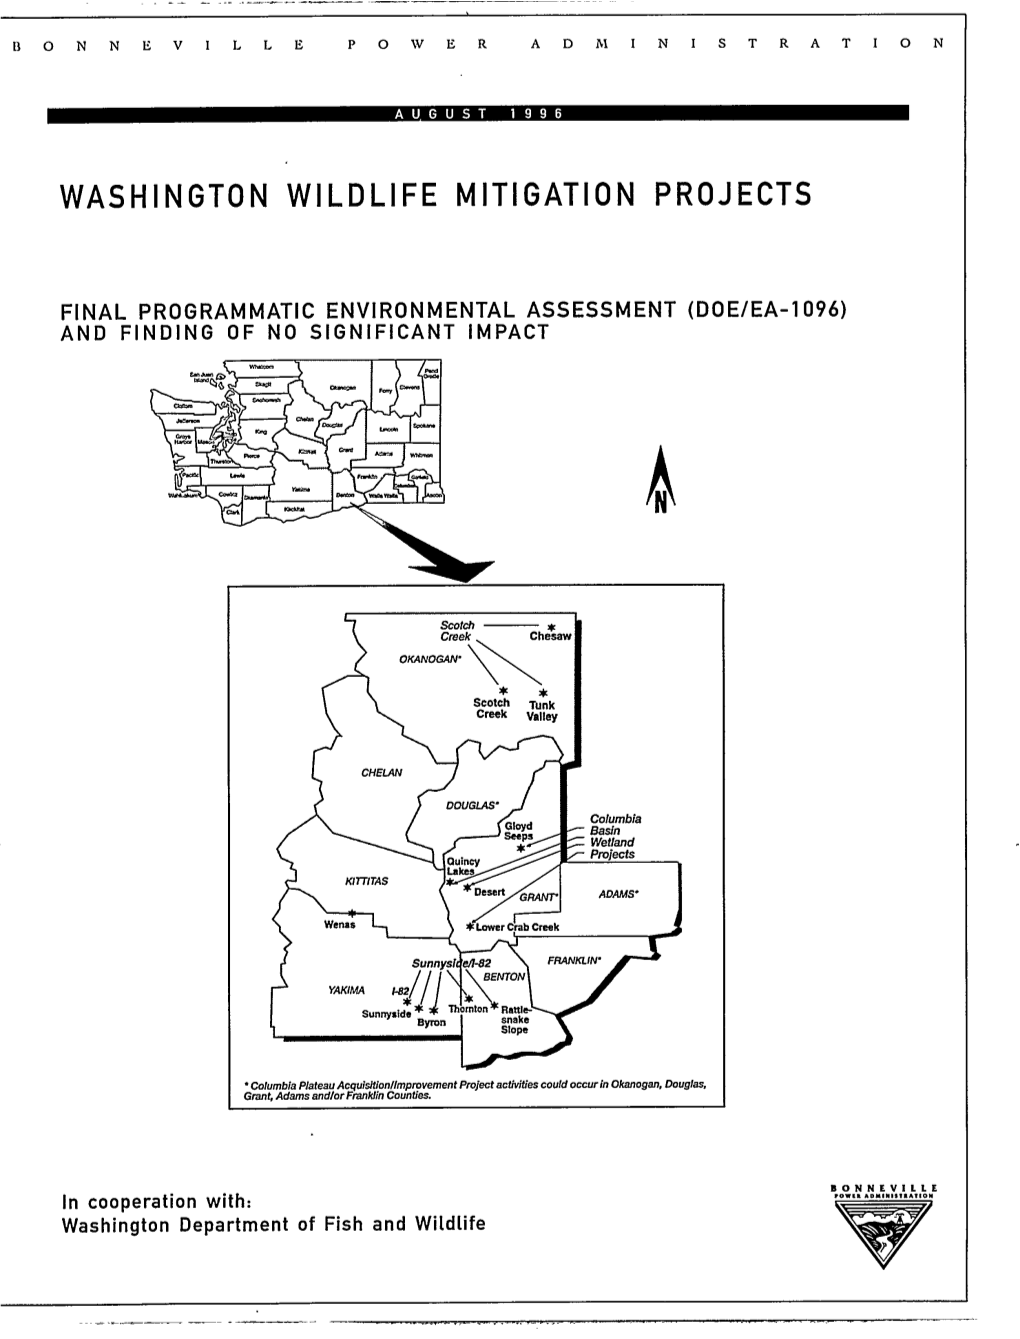 Washington Wildlife Mitigation Projects